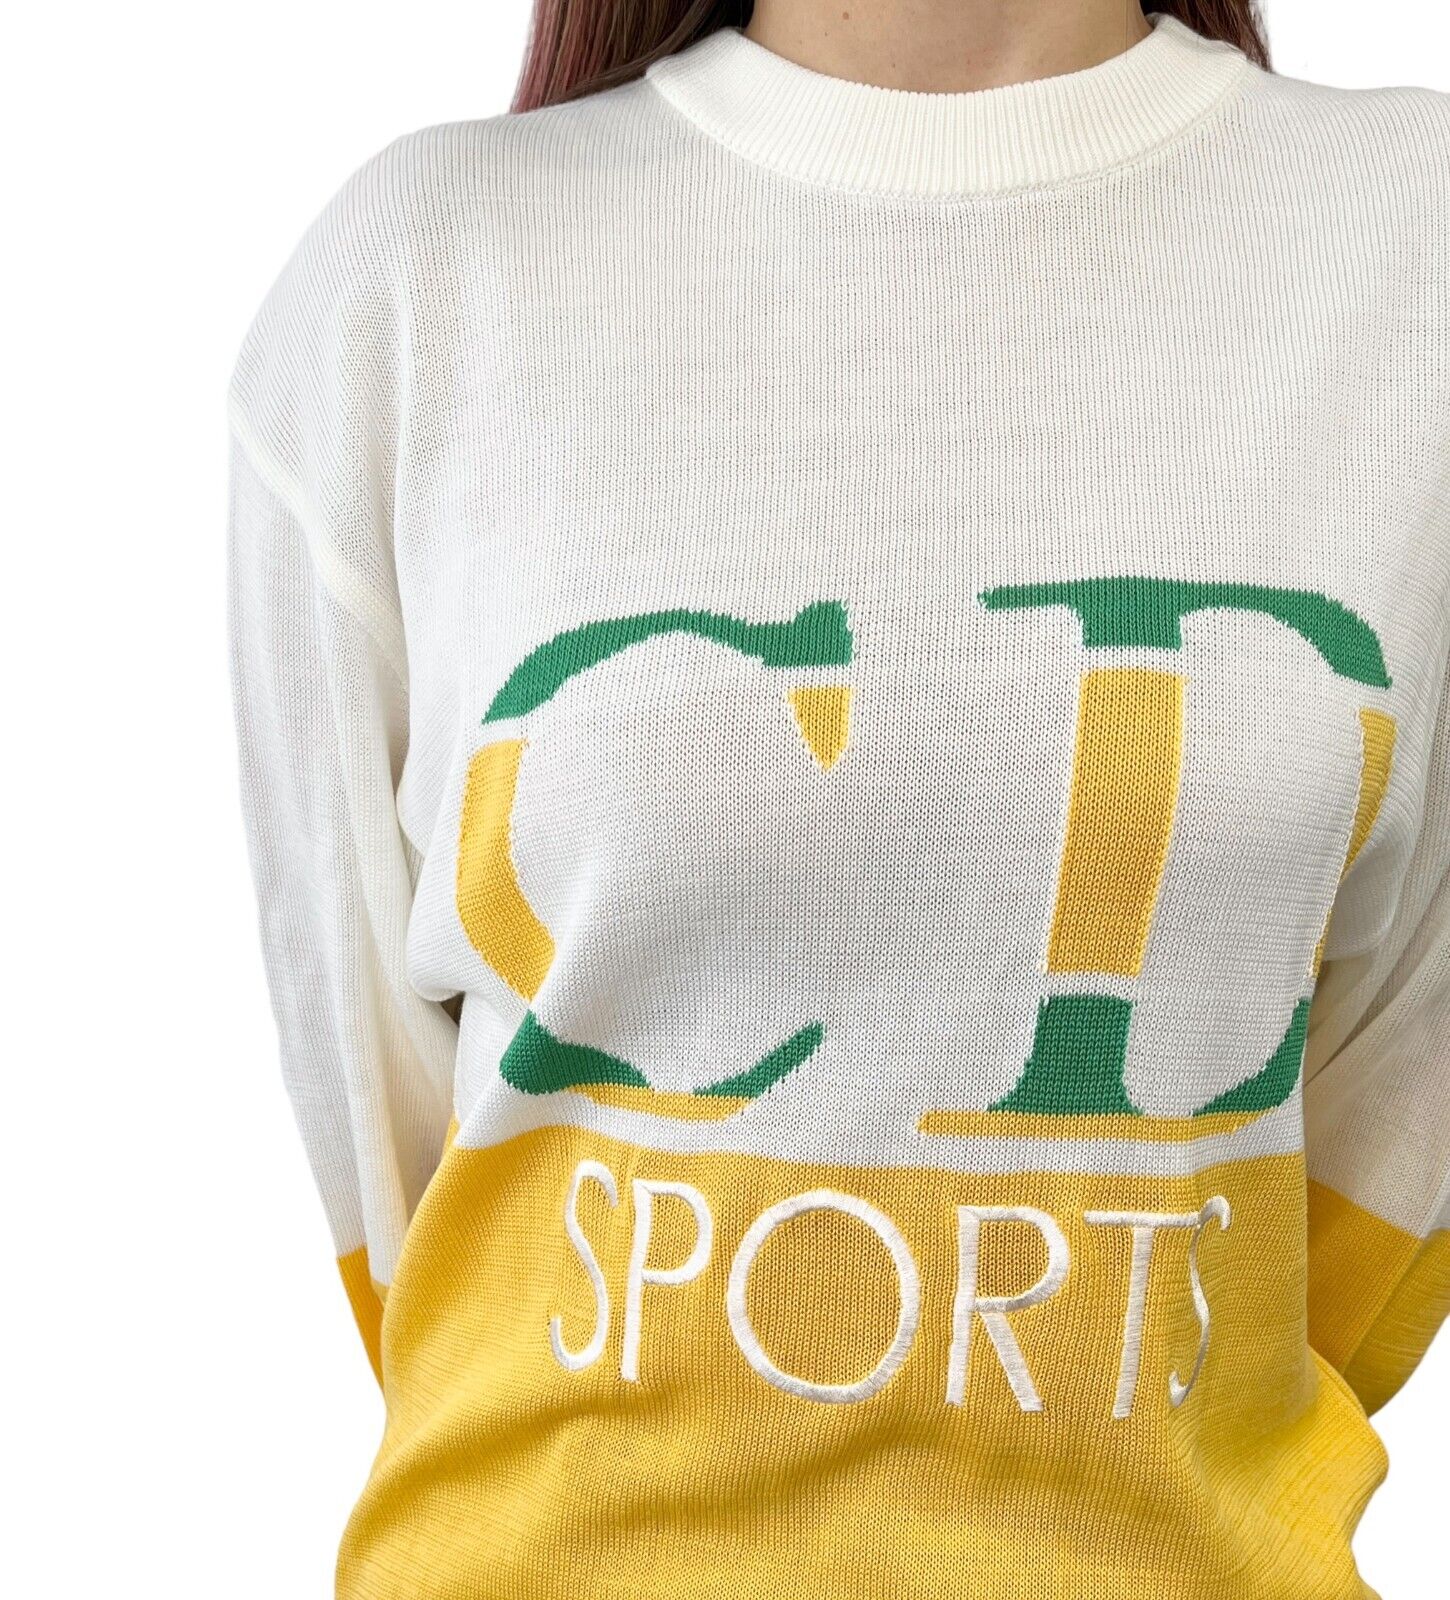 Christian Dior Sport Vintage Big Logo Sweater #L Top White Yellow Cotton RankAB